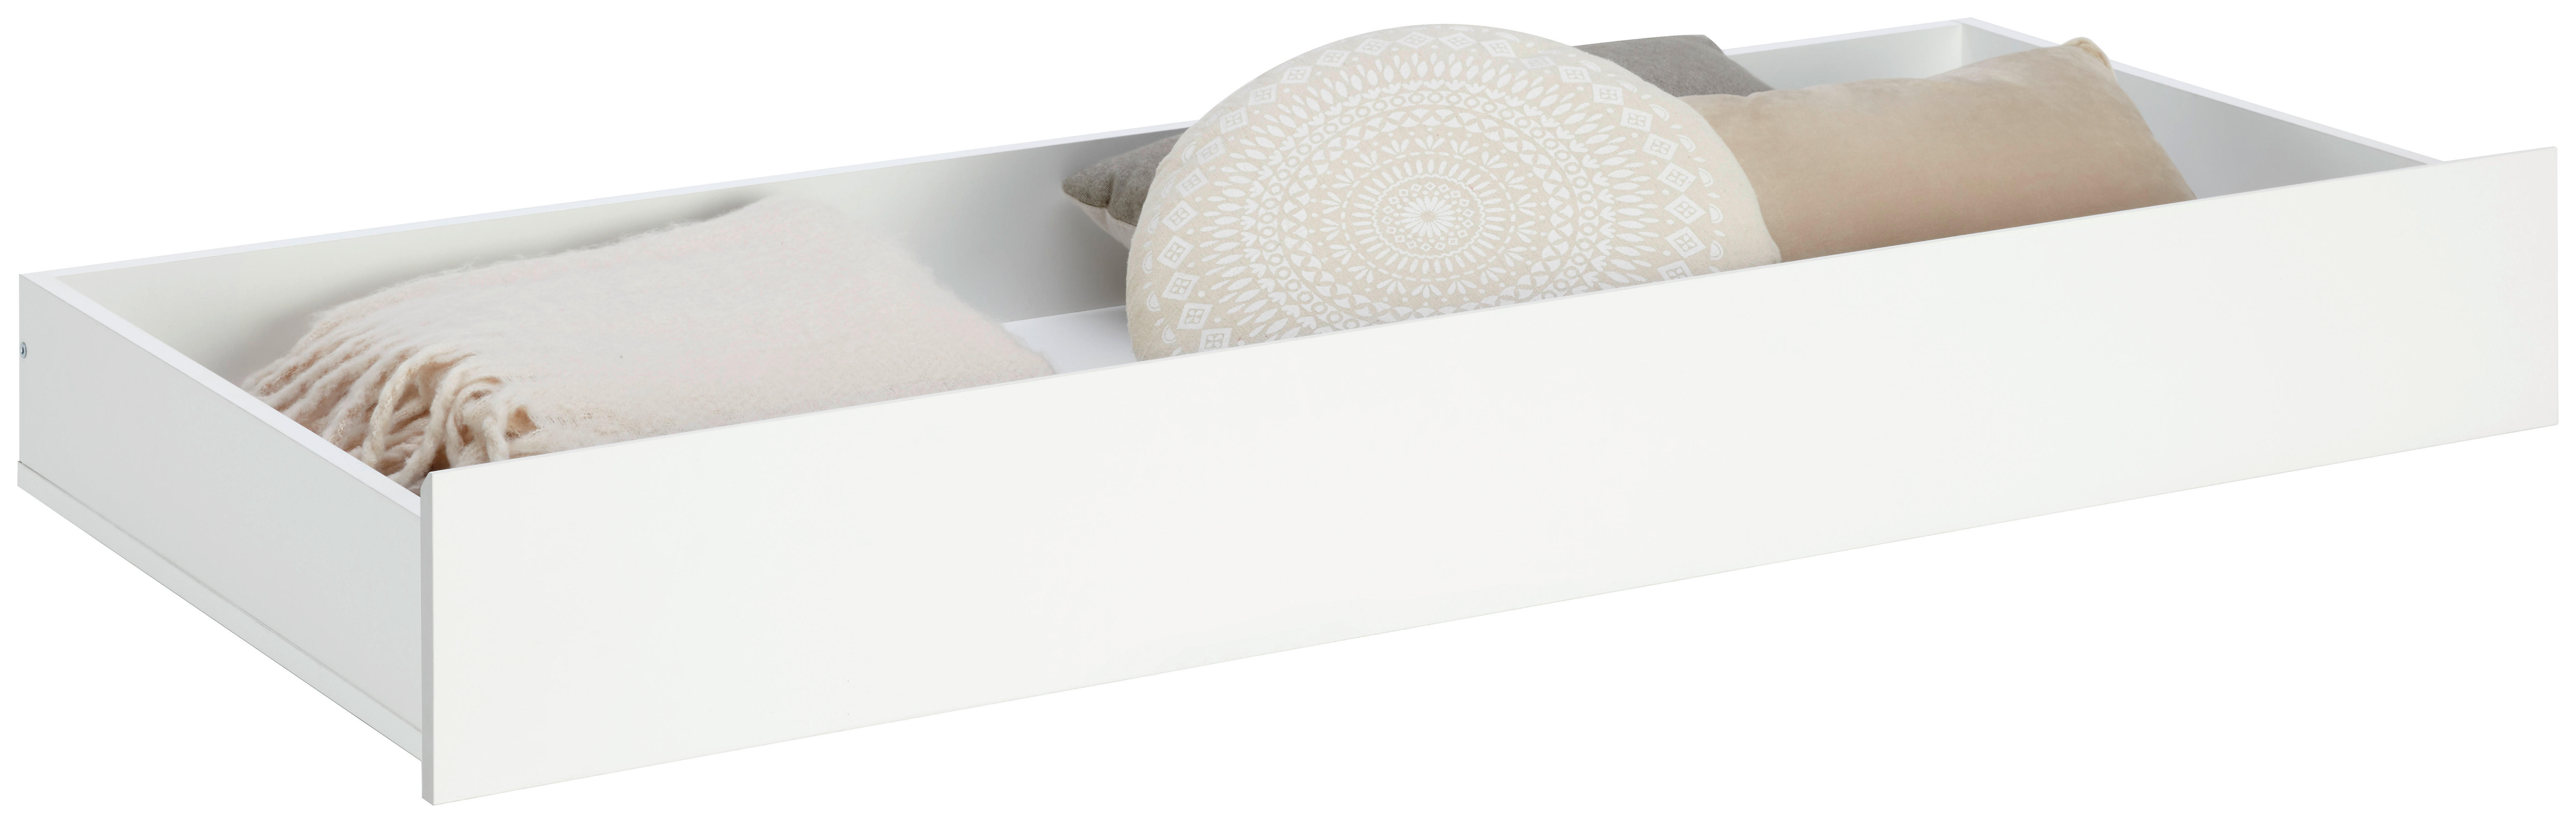 SERTAR DE DEPOZITARE SUB PAT  in  alb  - alb, Basics, material pe bază de lemn (199,9/21/66,9cm) - Hom`in